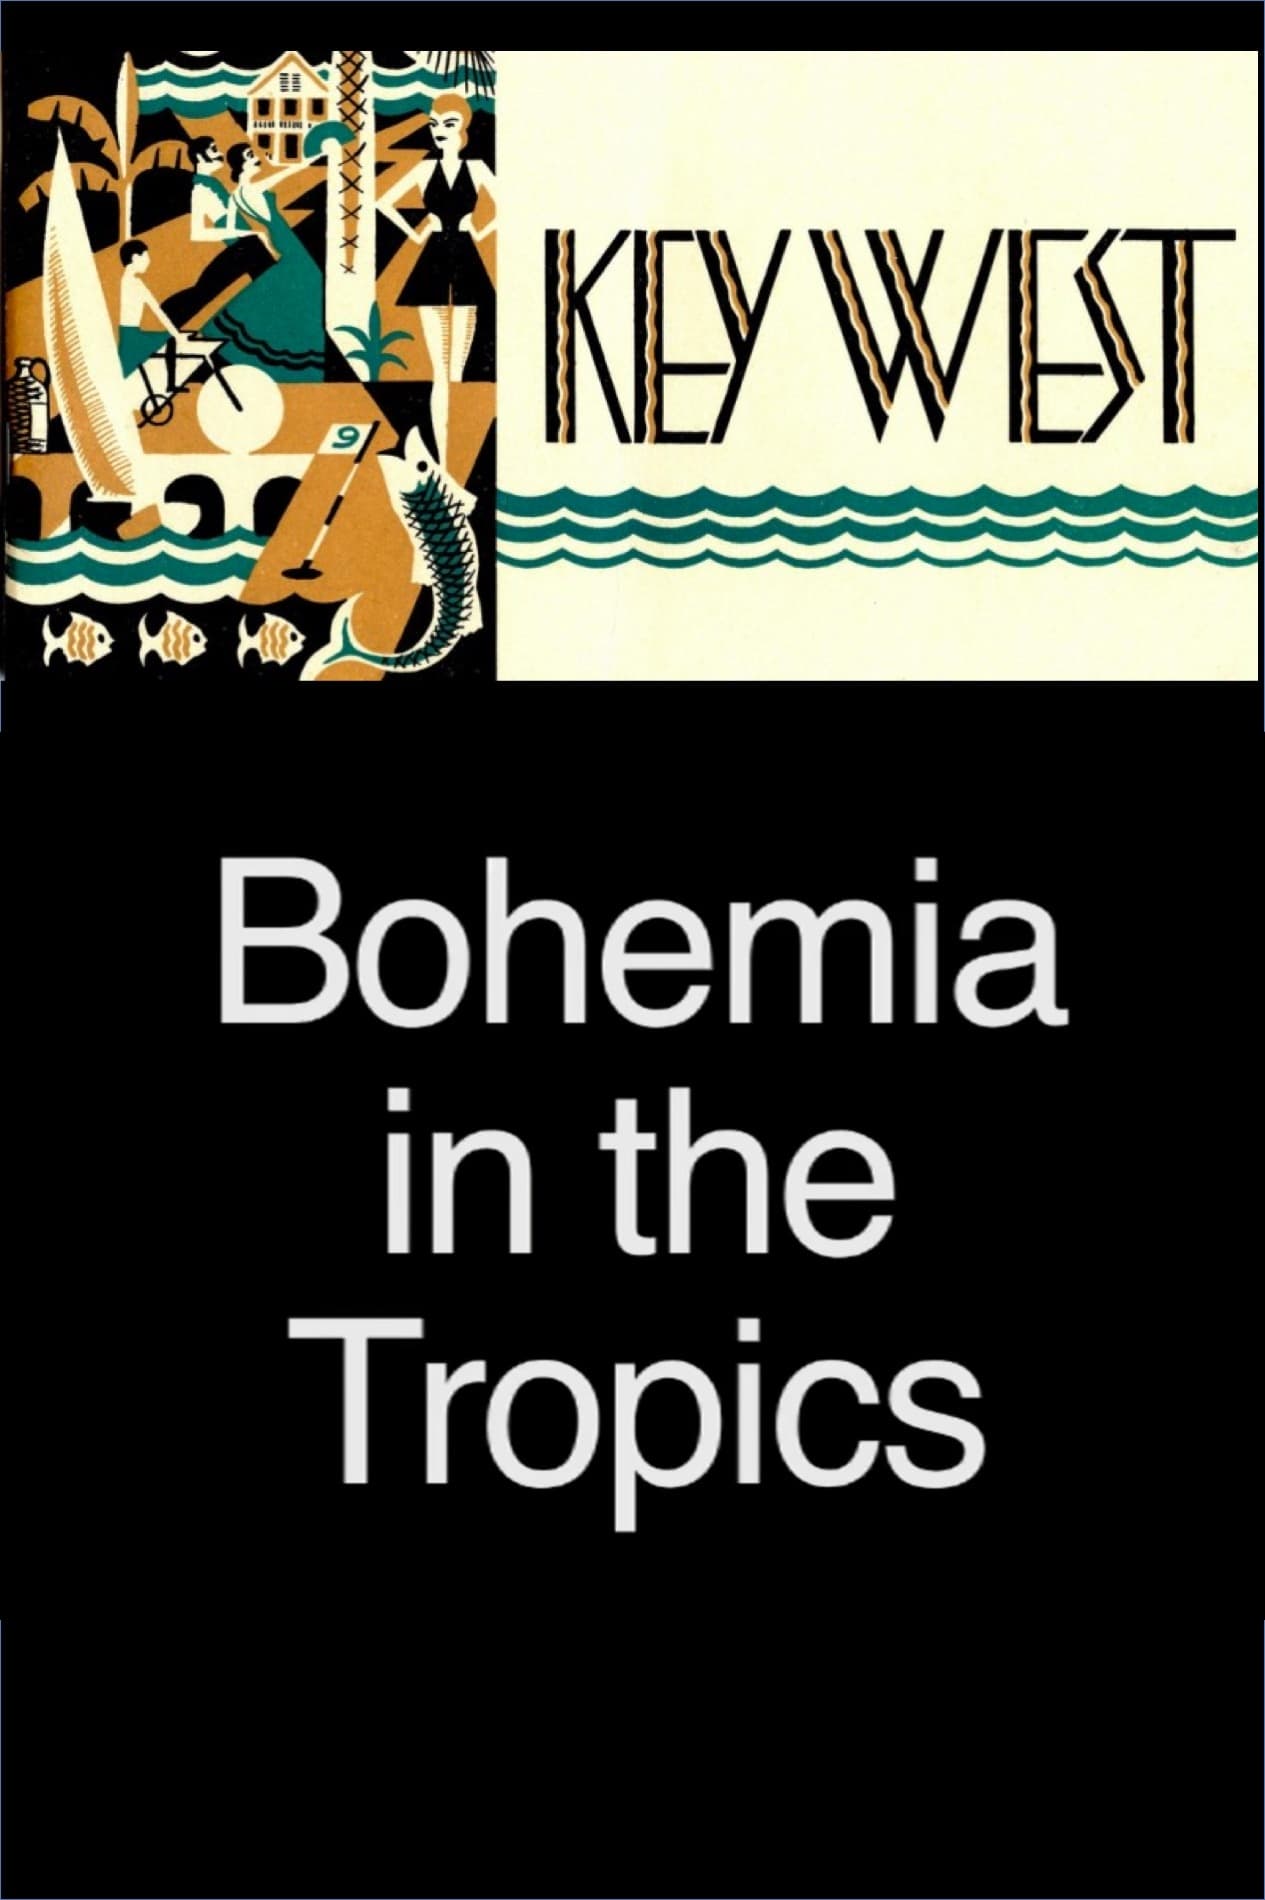 Key West: Bohemia in the Tropics